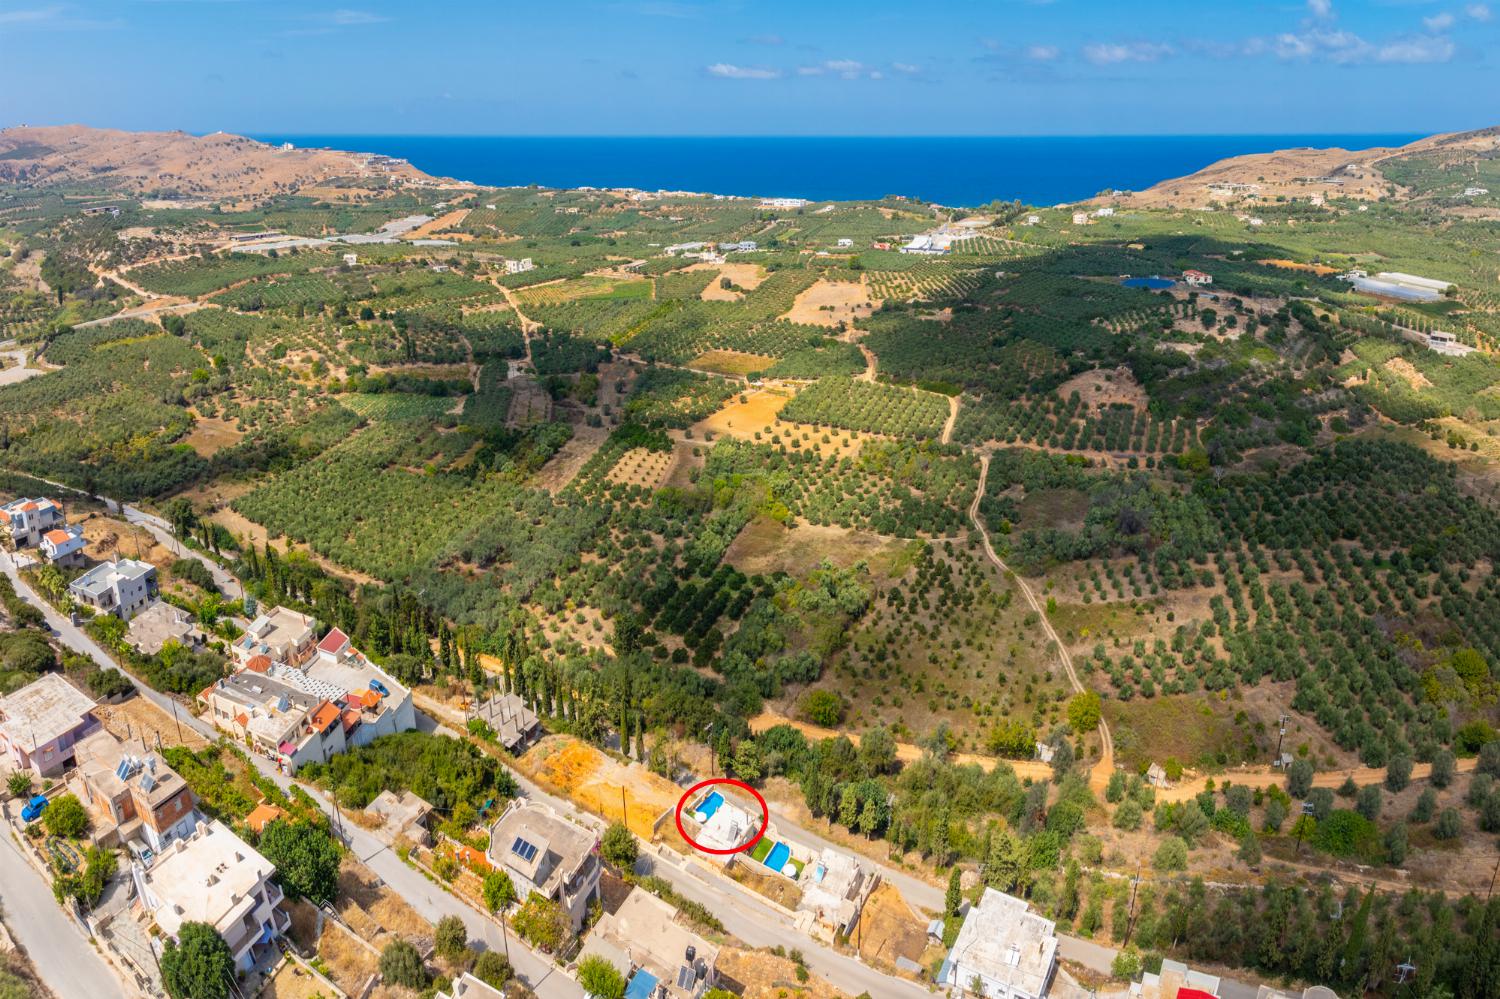 Aerial view showing location of Stefania Villa Dio